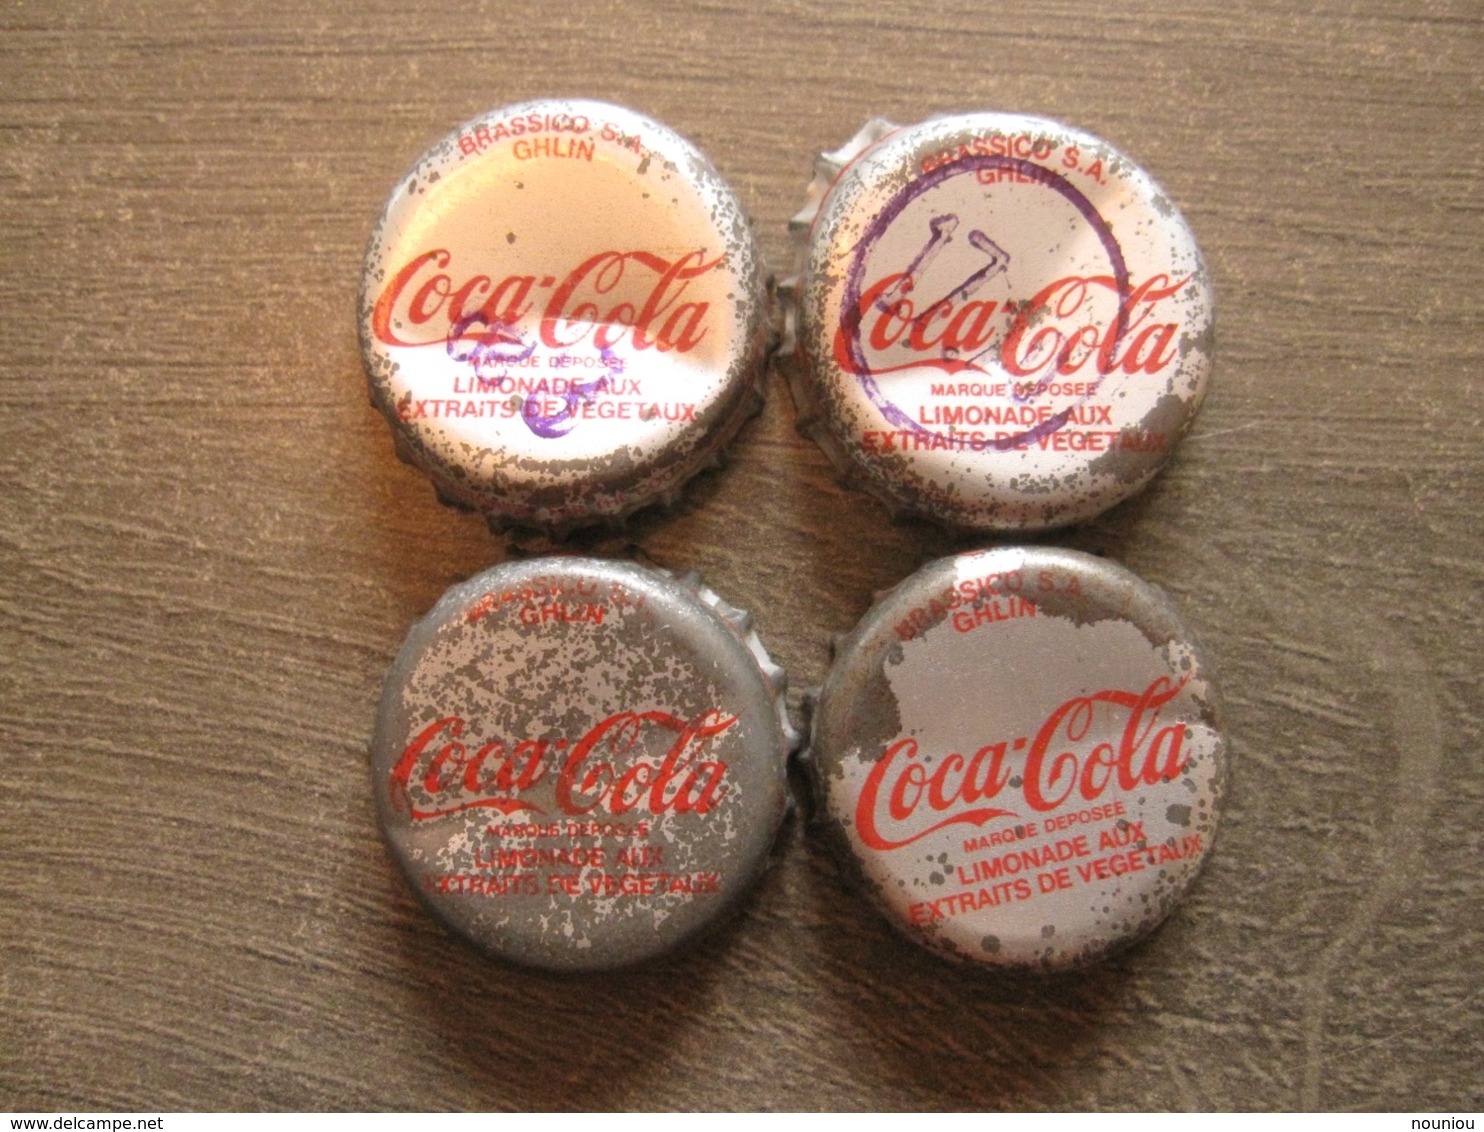 4 Coca-cola Caps Capsule - Teach In Rock Pop Band Music - Brassico Ghlin (Belgium) - Soda